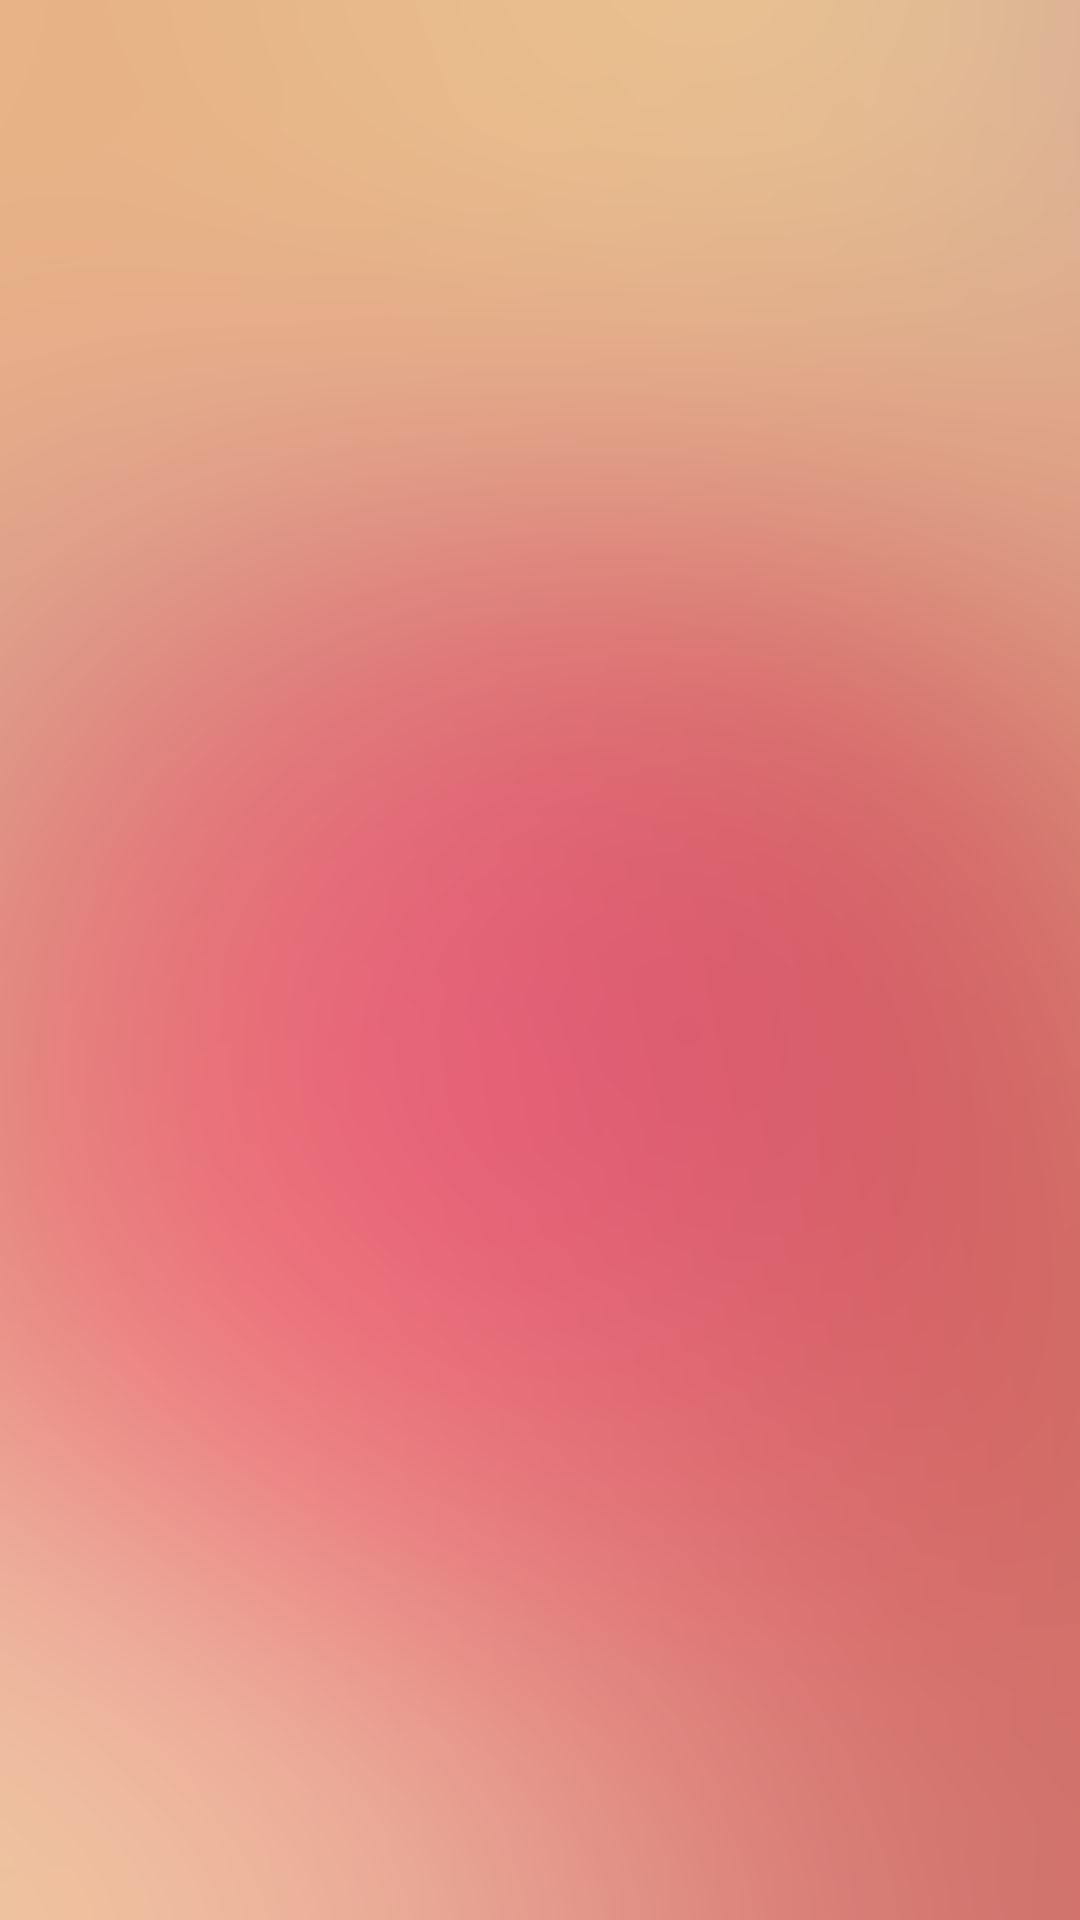 Orange Pink Minimal Gradient Android Wallpaper free download